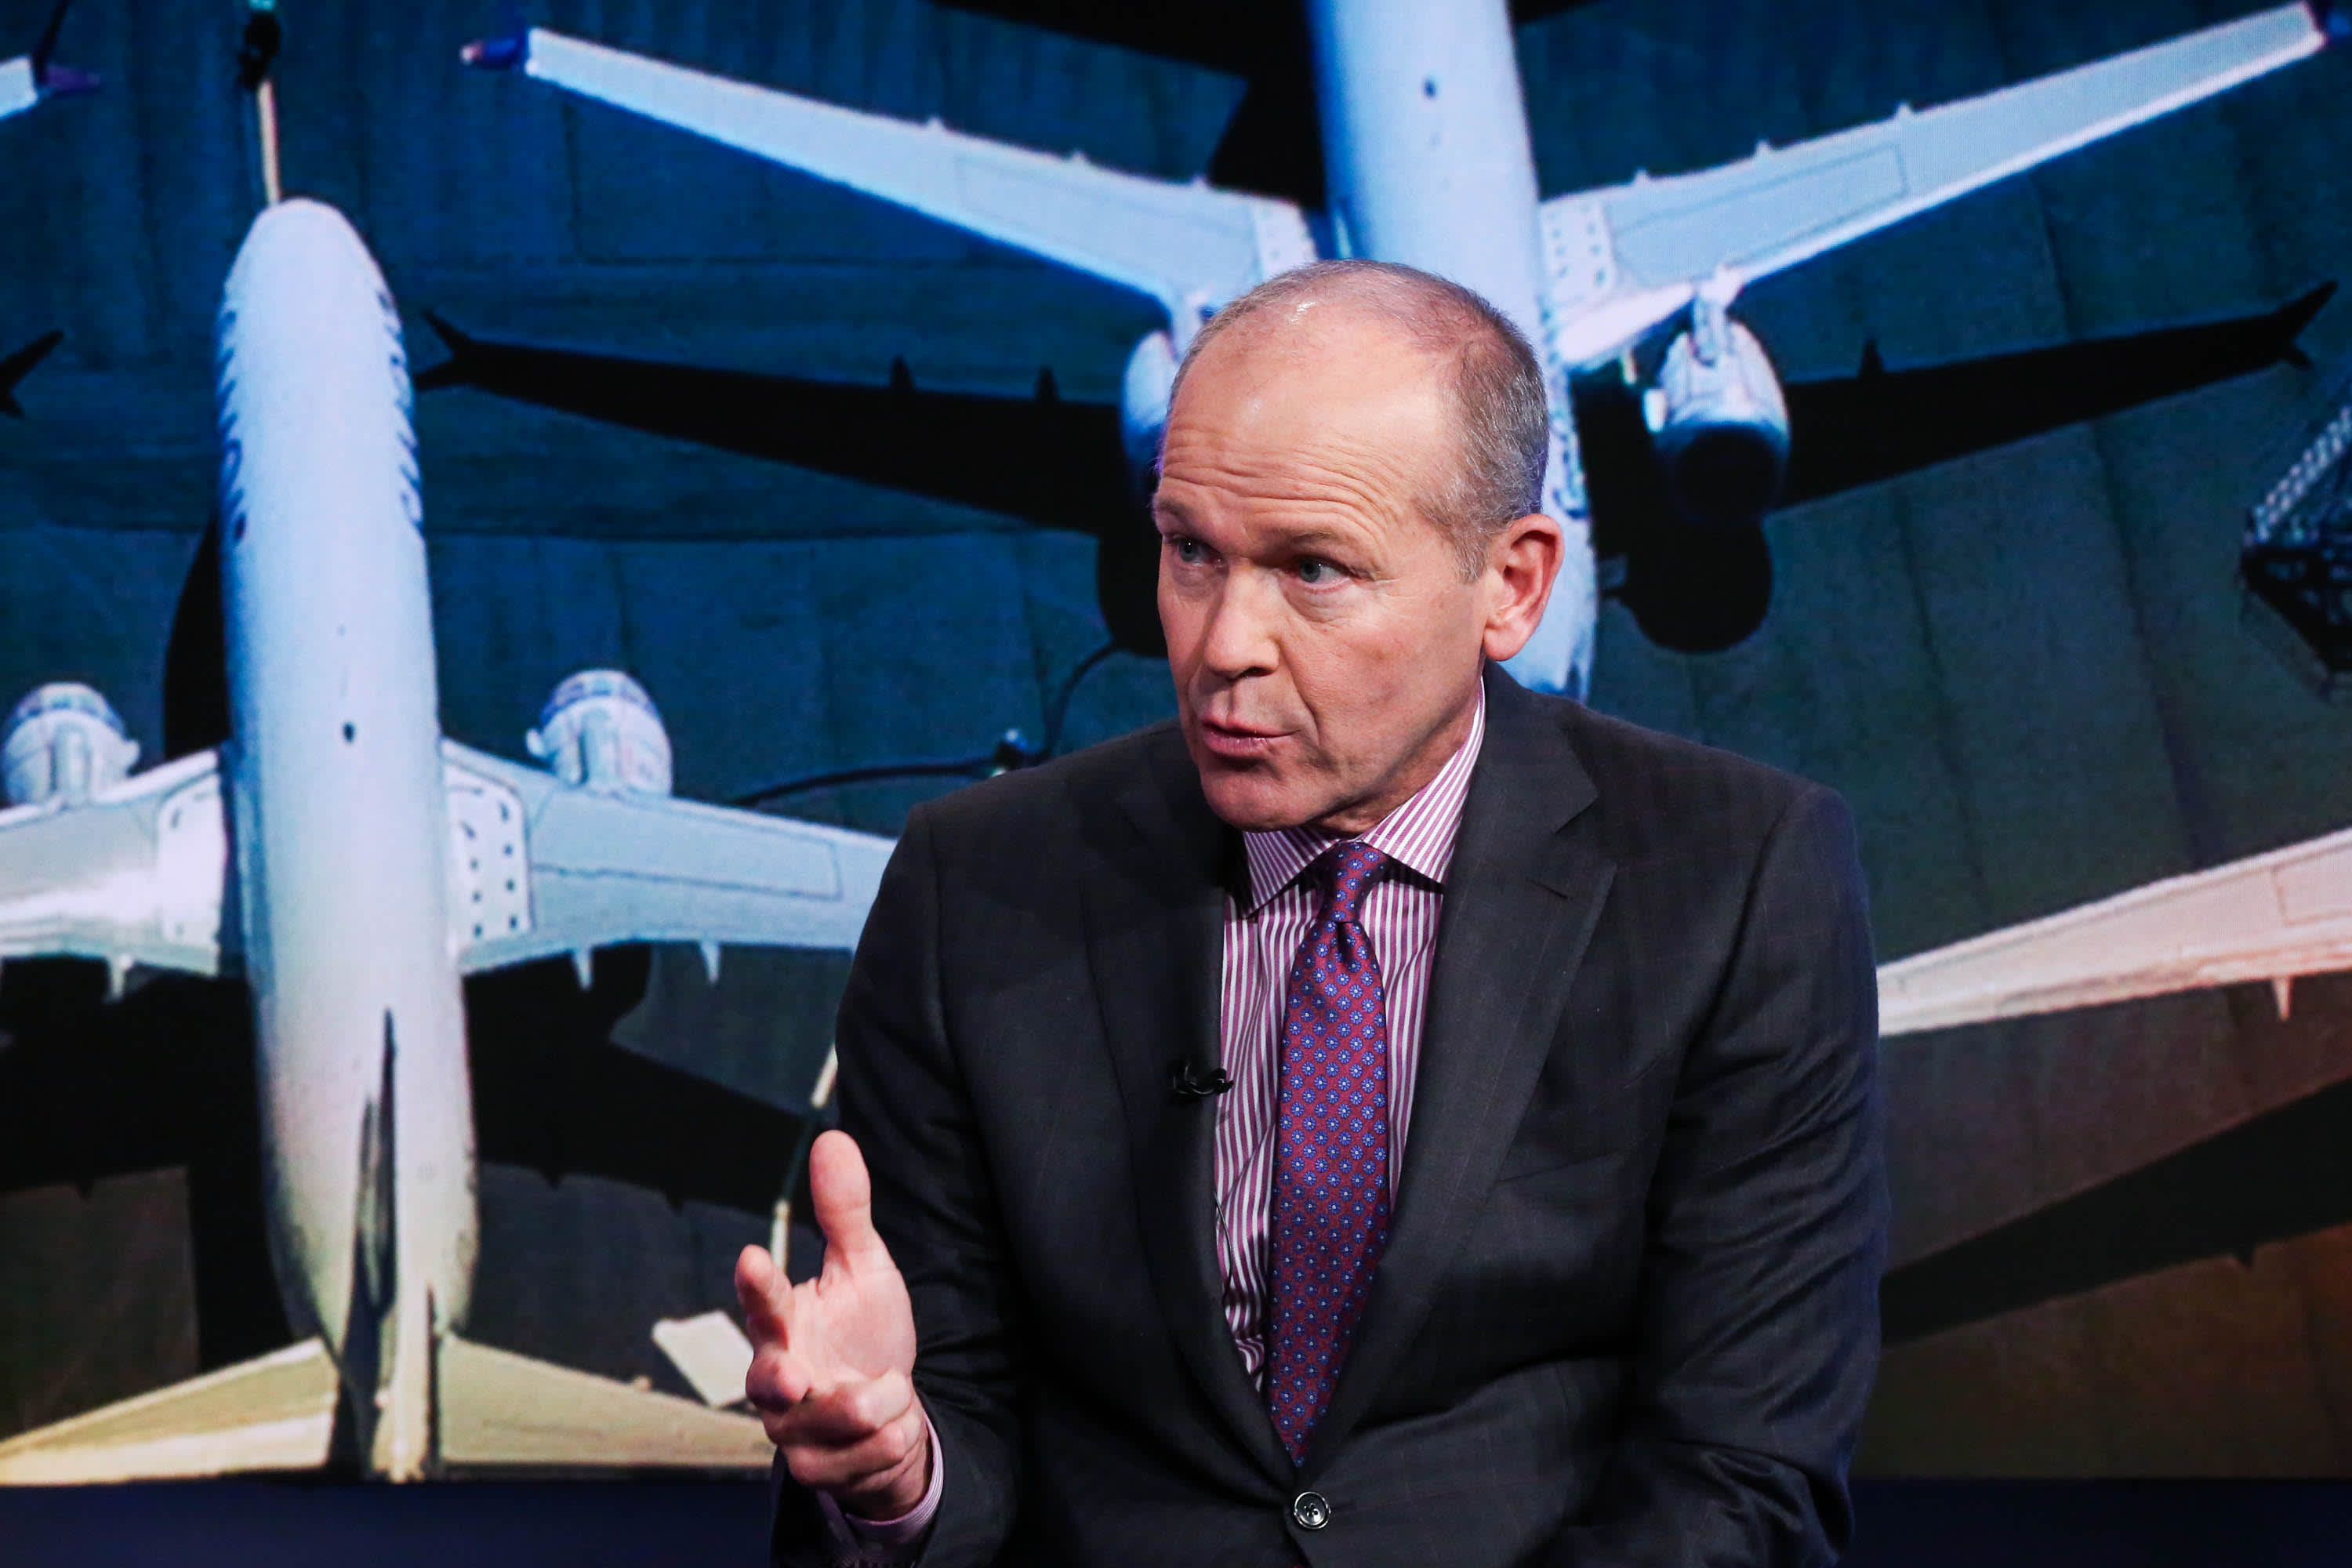 Boeing raises mandatory retirement age for CEO Calhoun by 5 years, CFO to retire